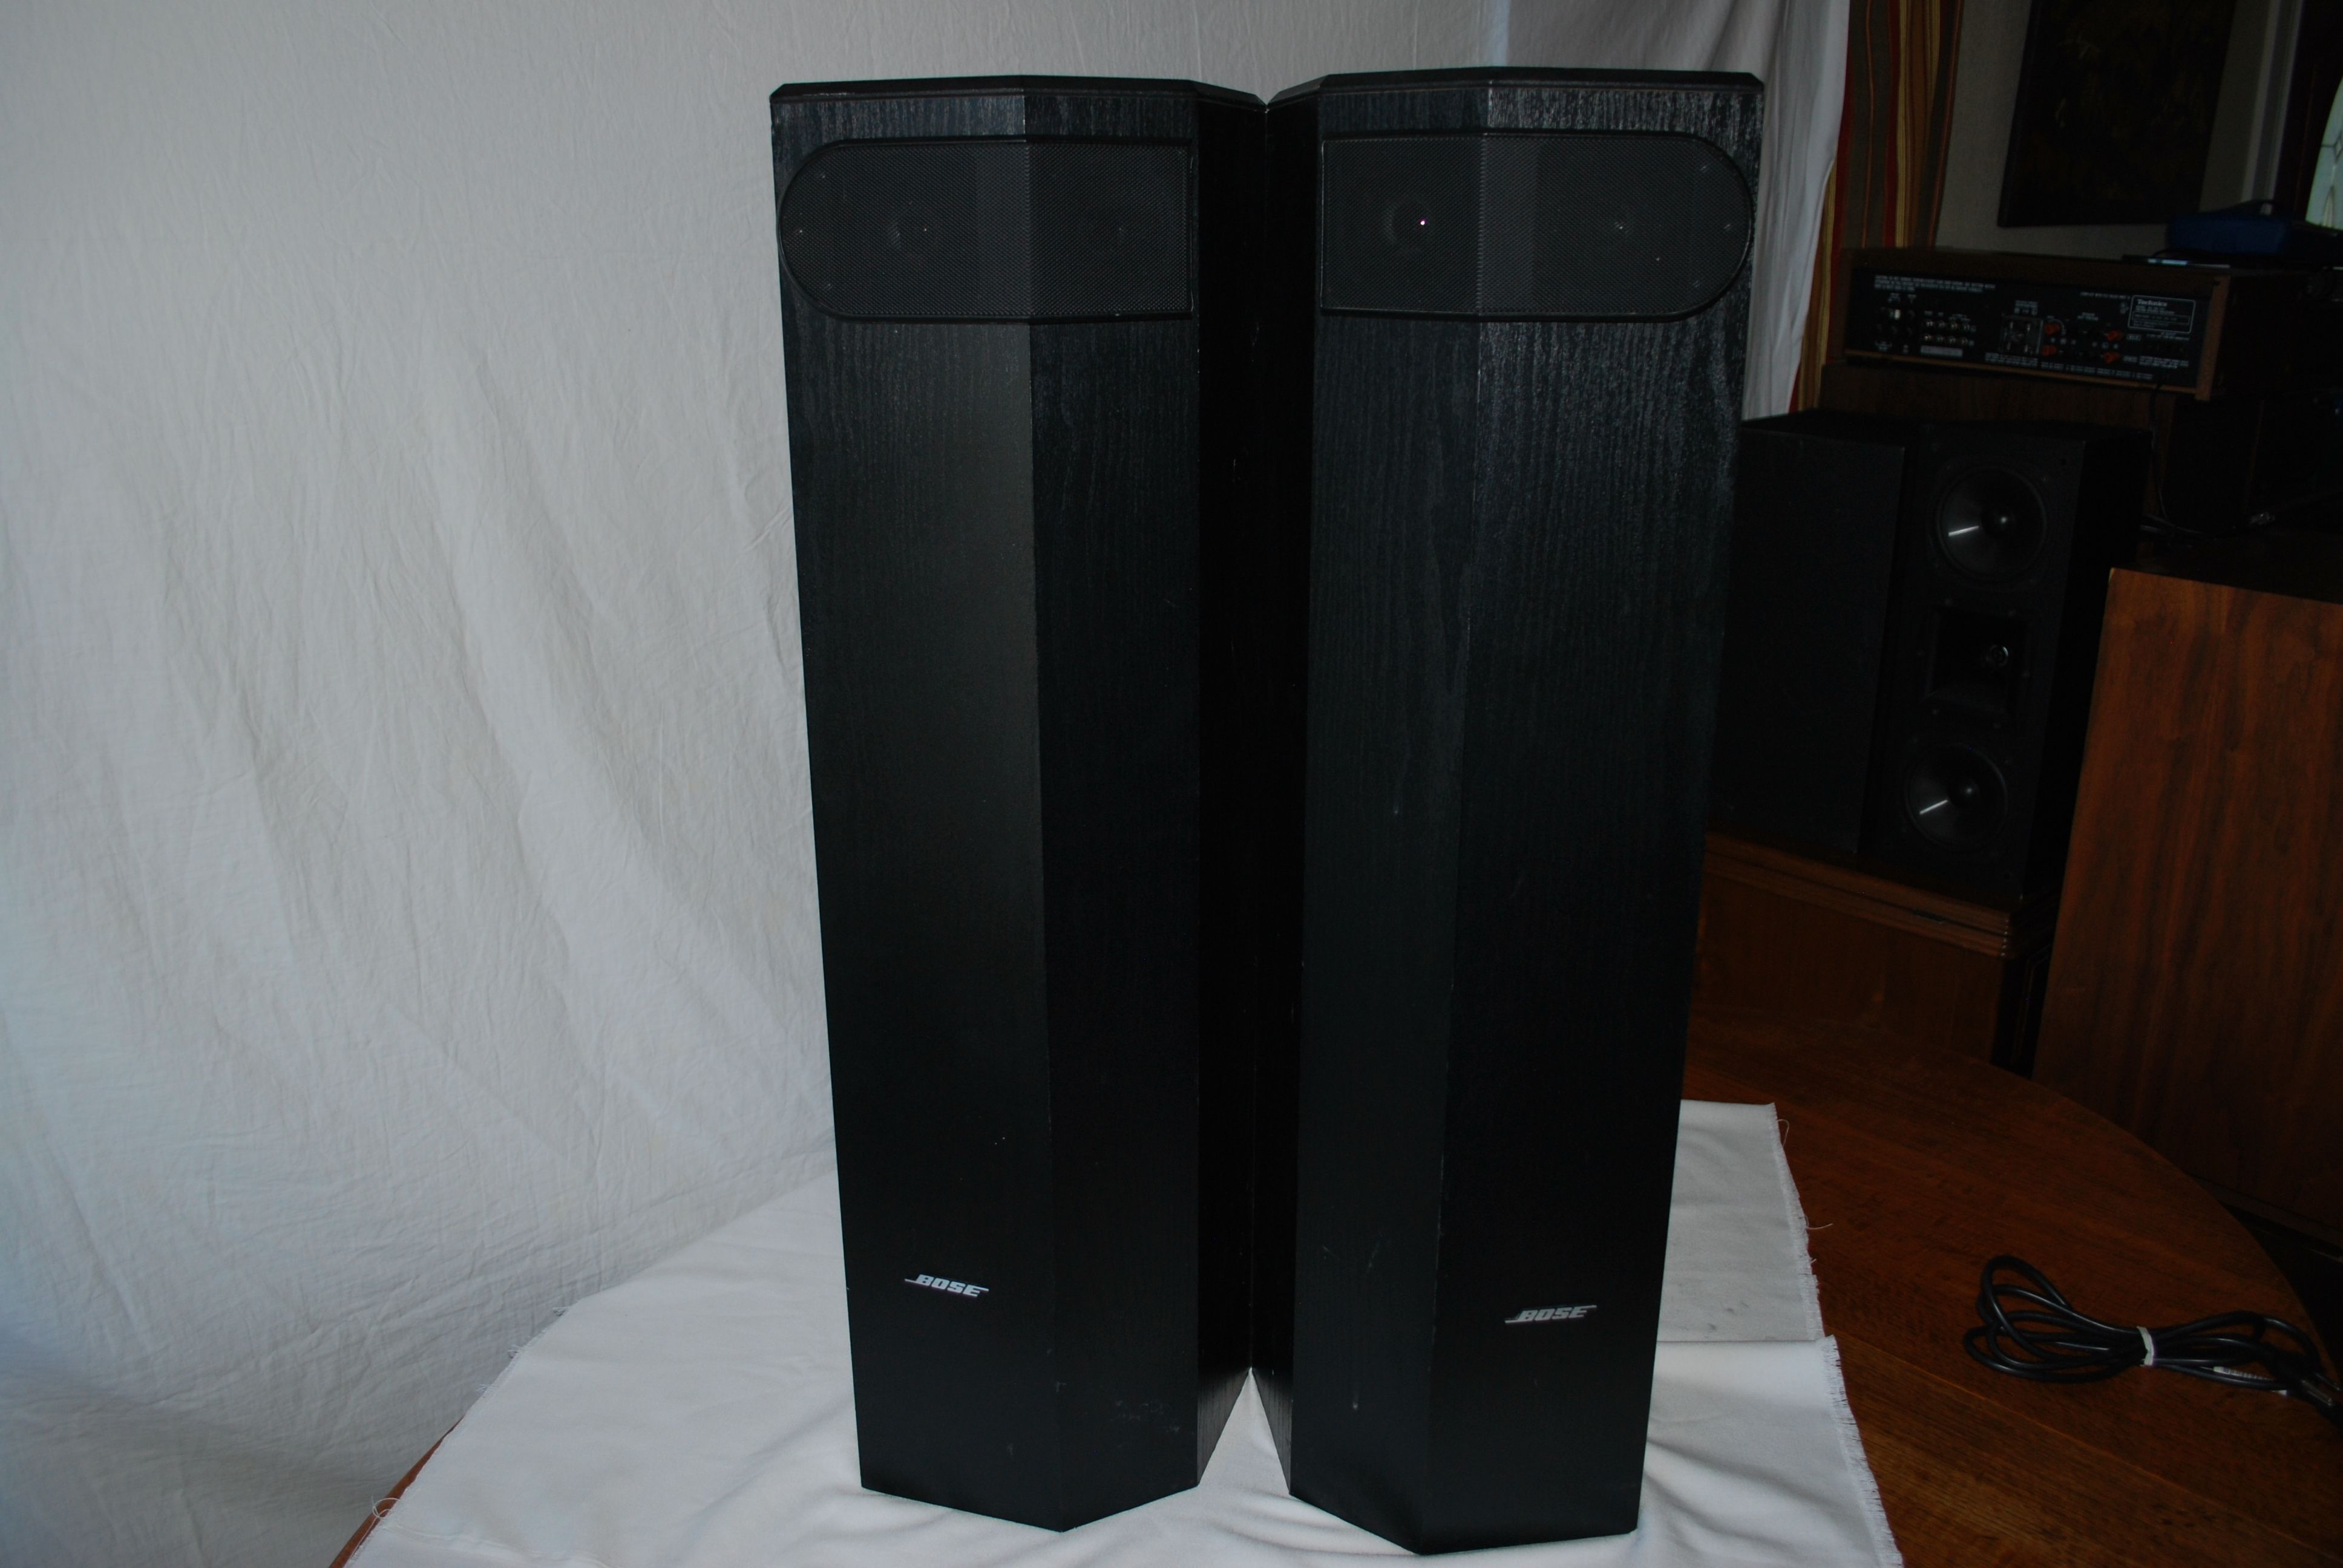 Bose 501 series V Speakers